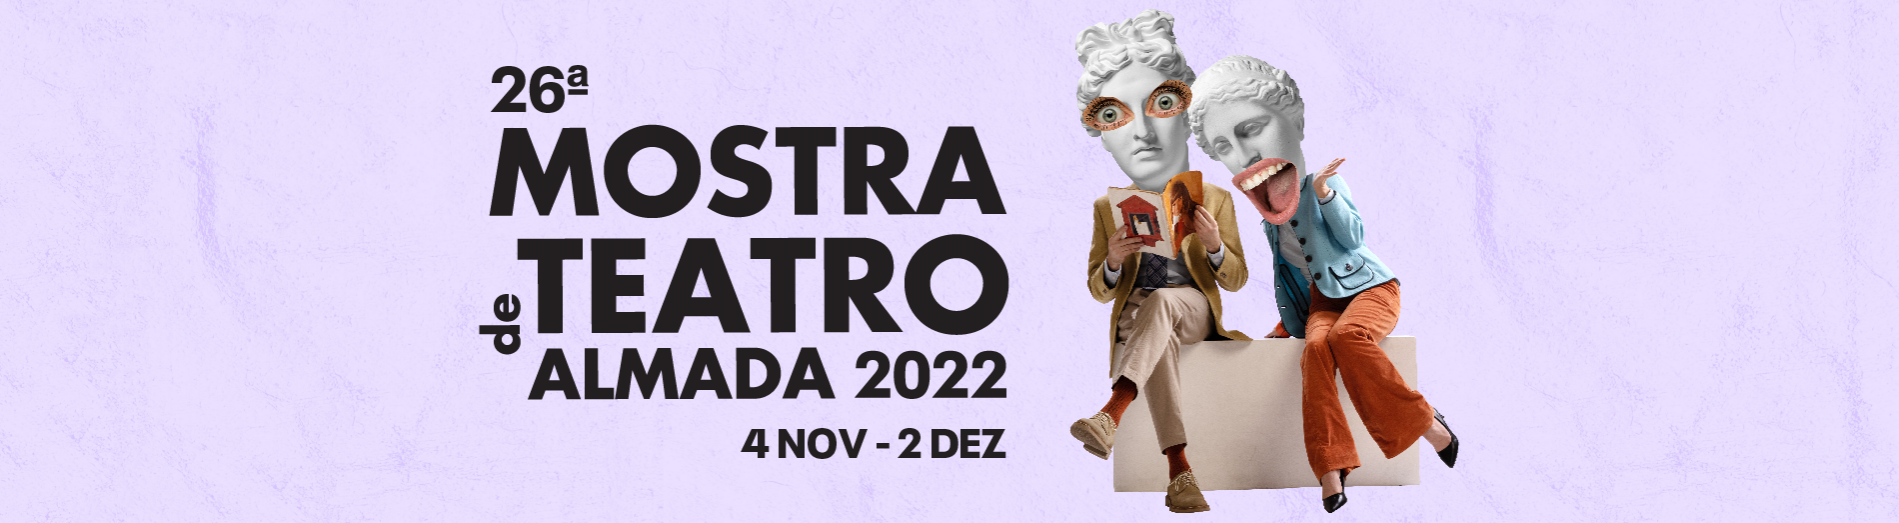 Banner lettering Mostra Teatro 2022